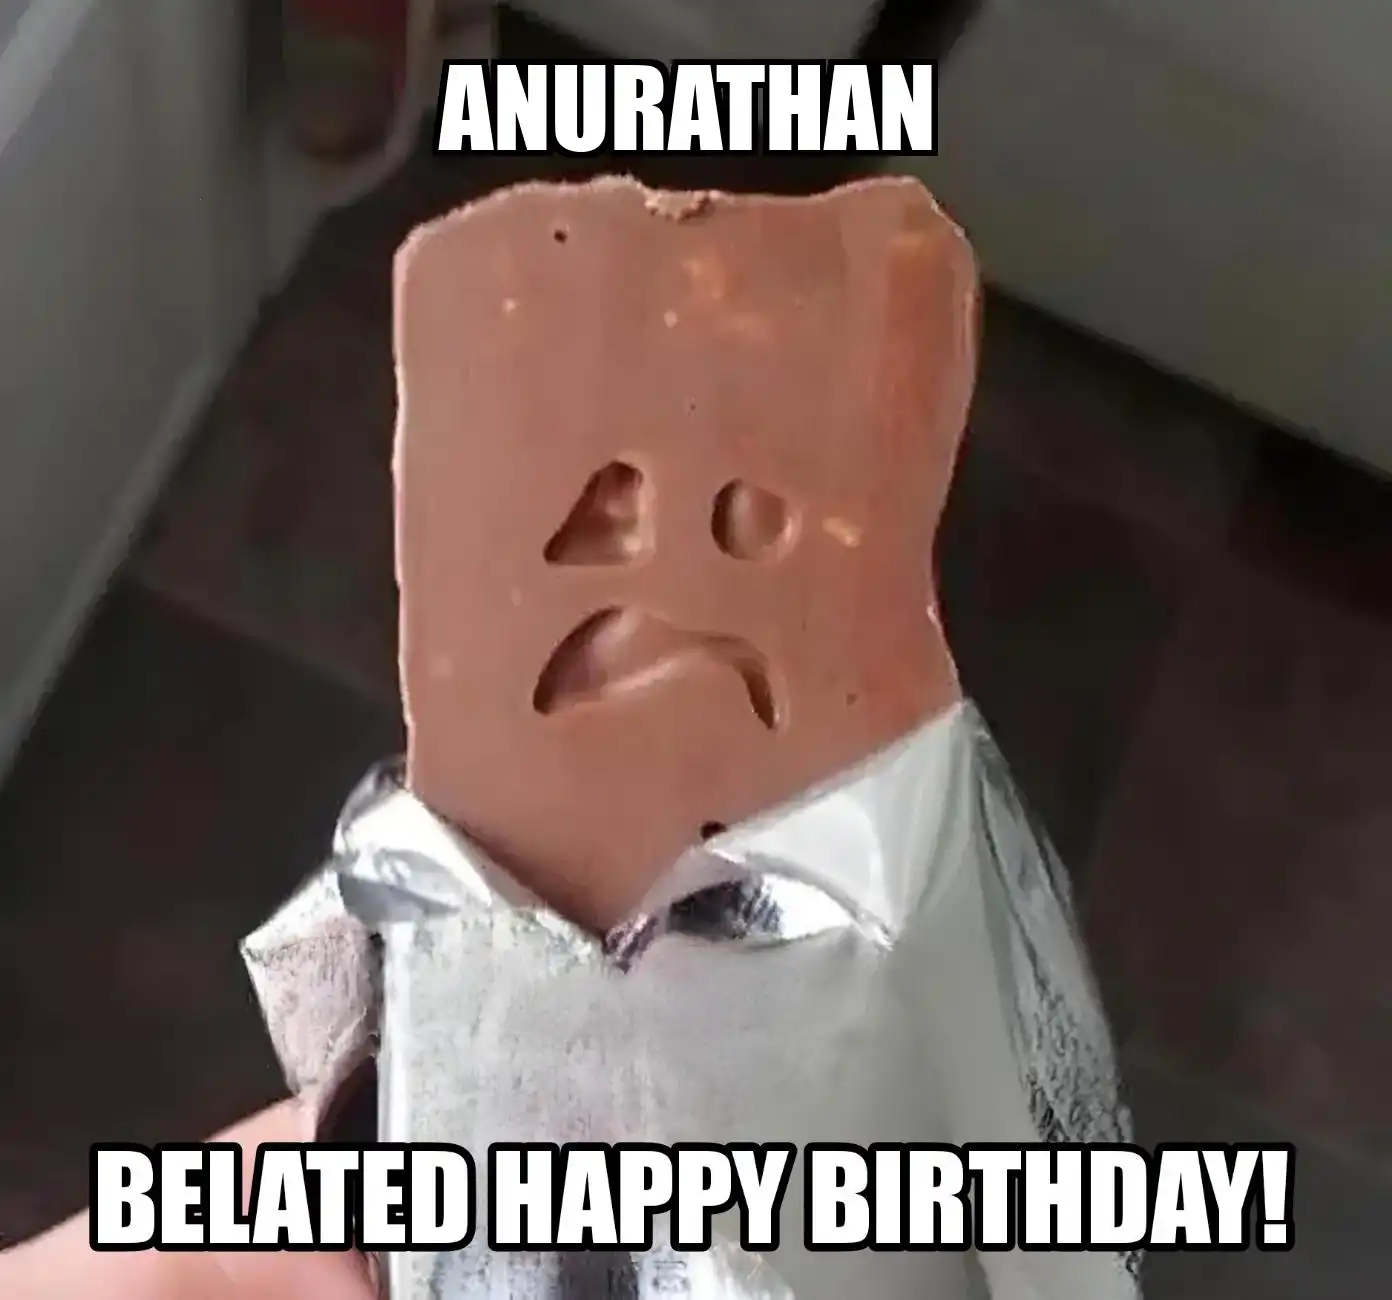 Happy Birthday Anurathan Belated Happy Birthday Meme